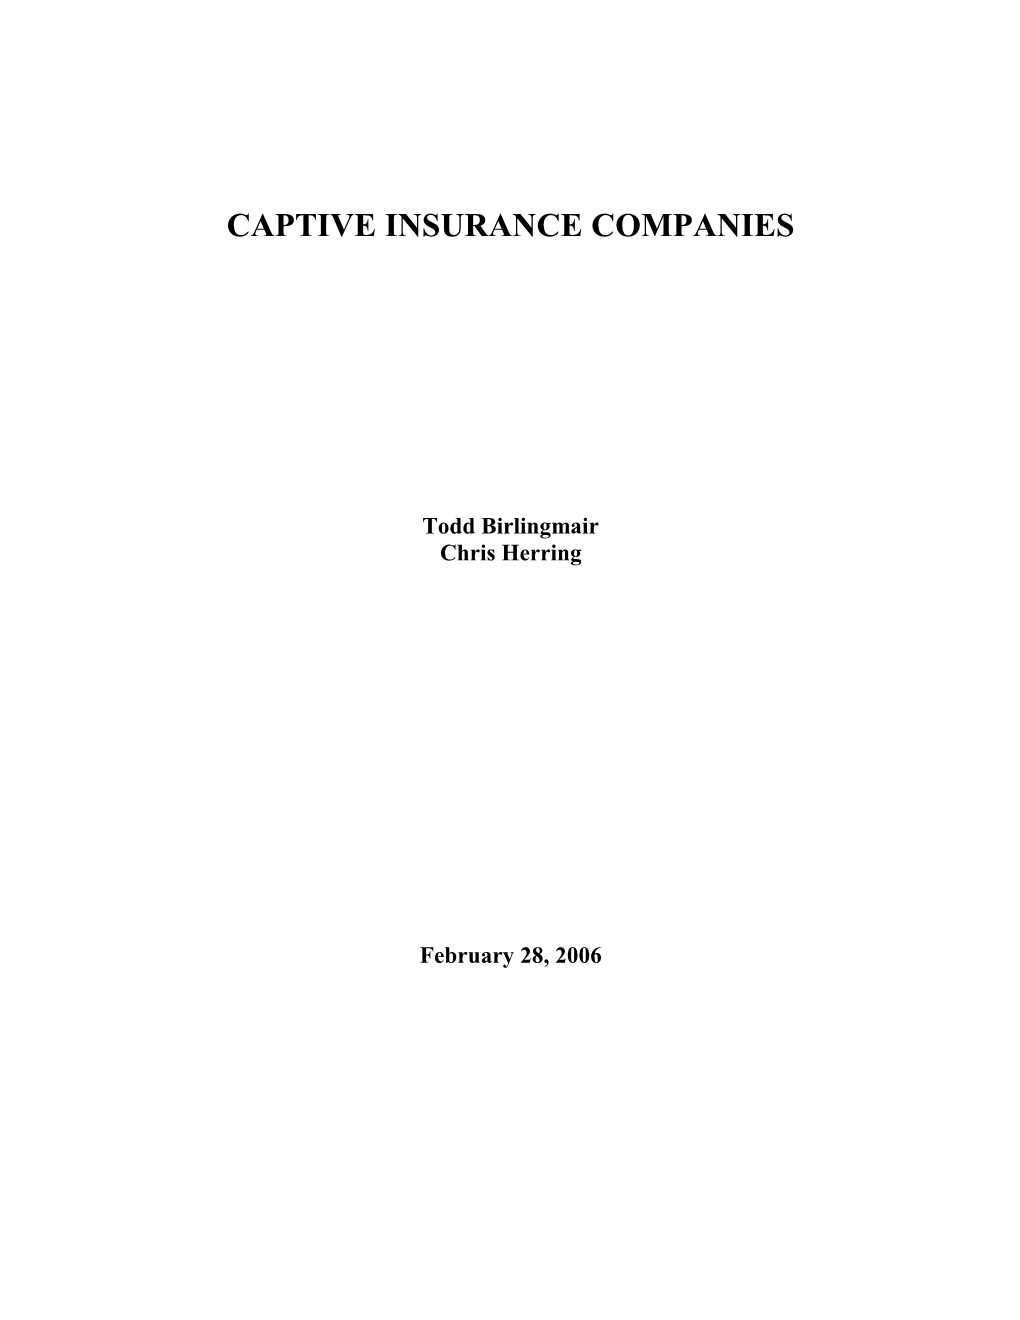 Captive Insurance Companies